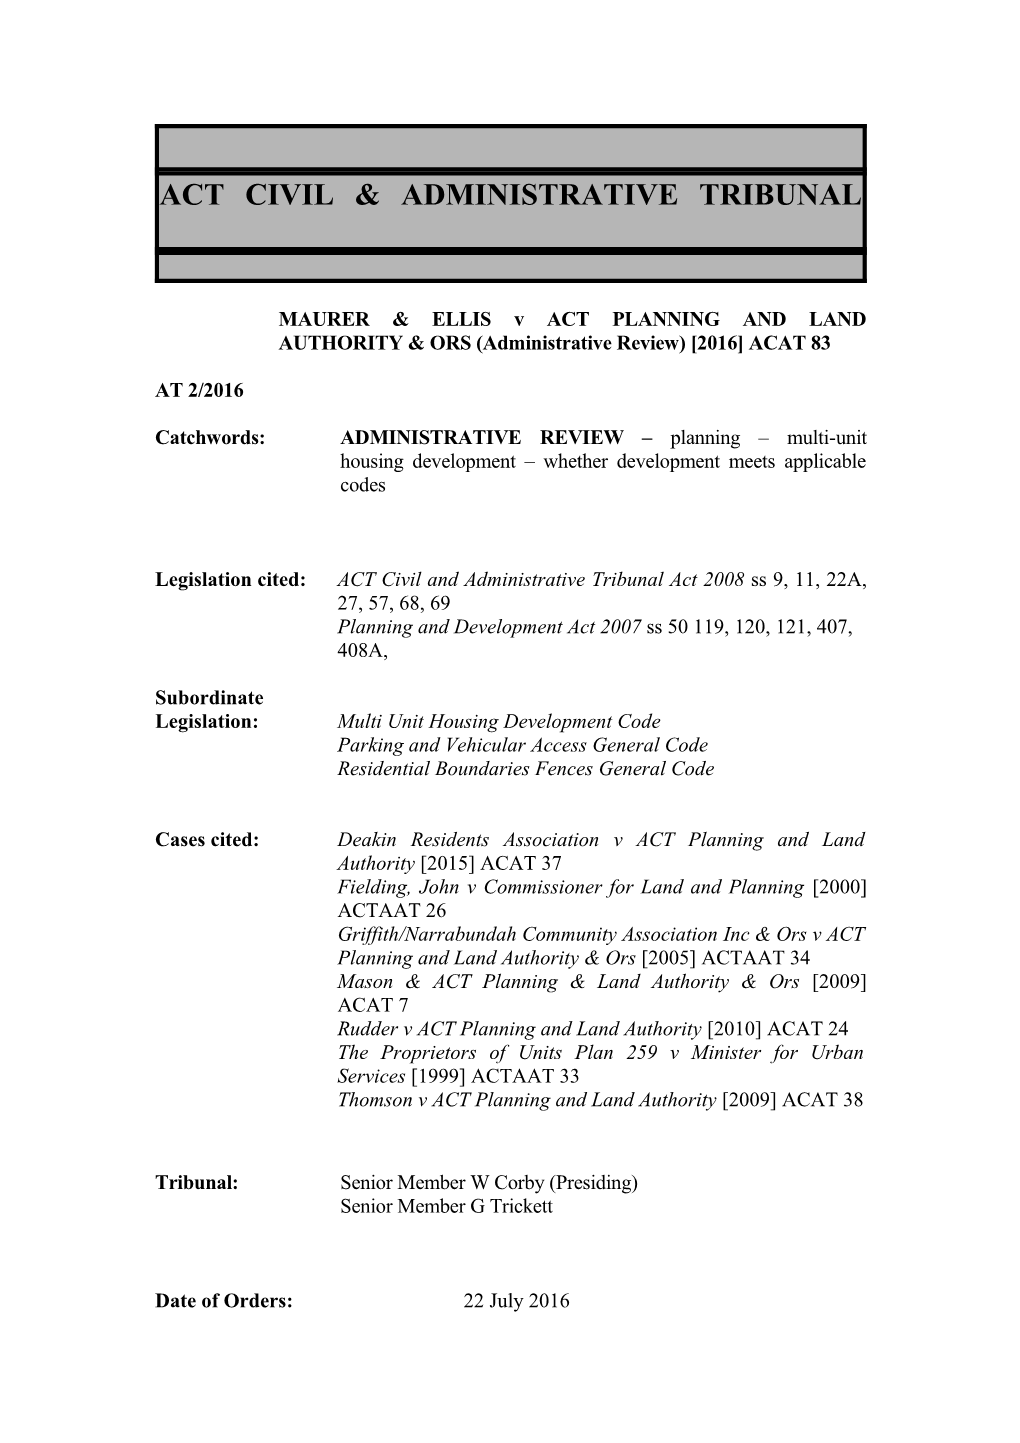 Act Civil & Administrative Tribunal s1